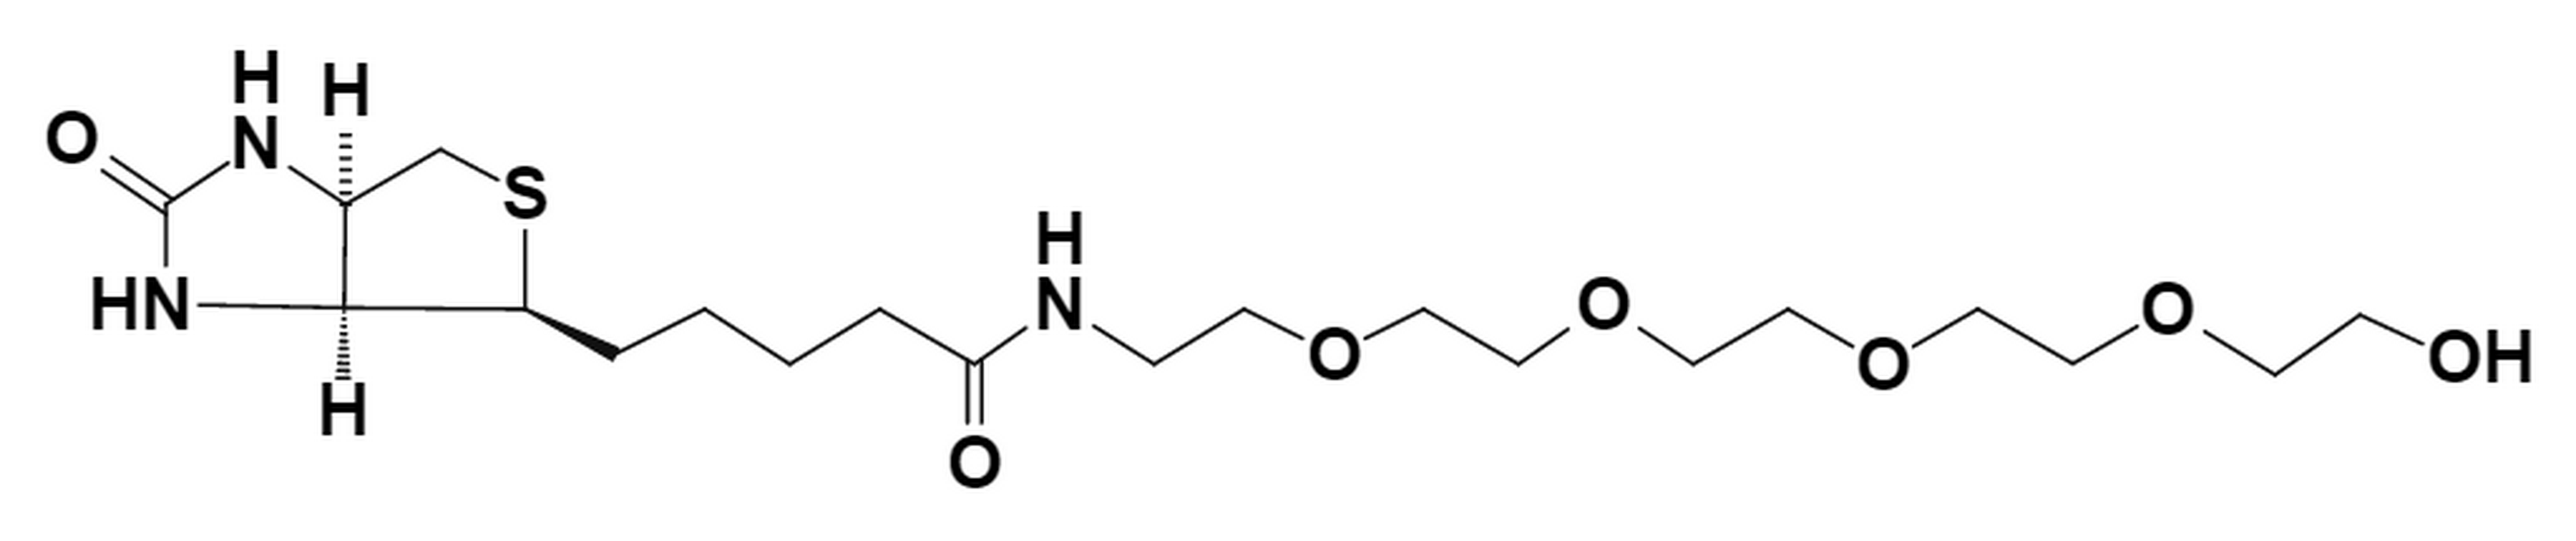 Biotin-PEG5-alcohol